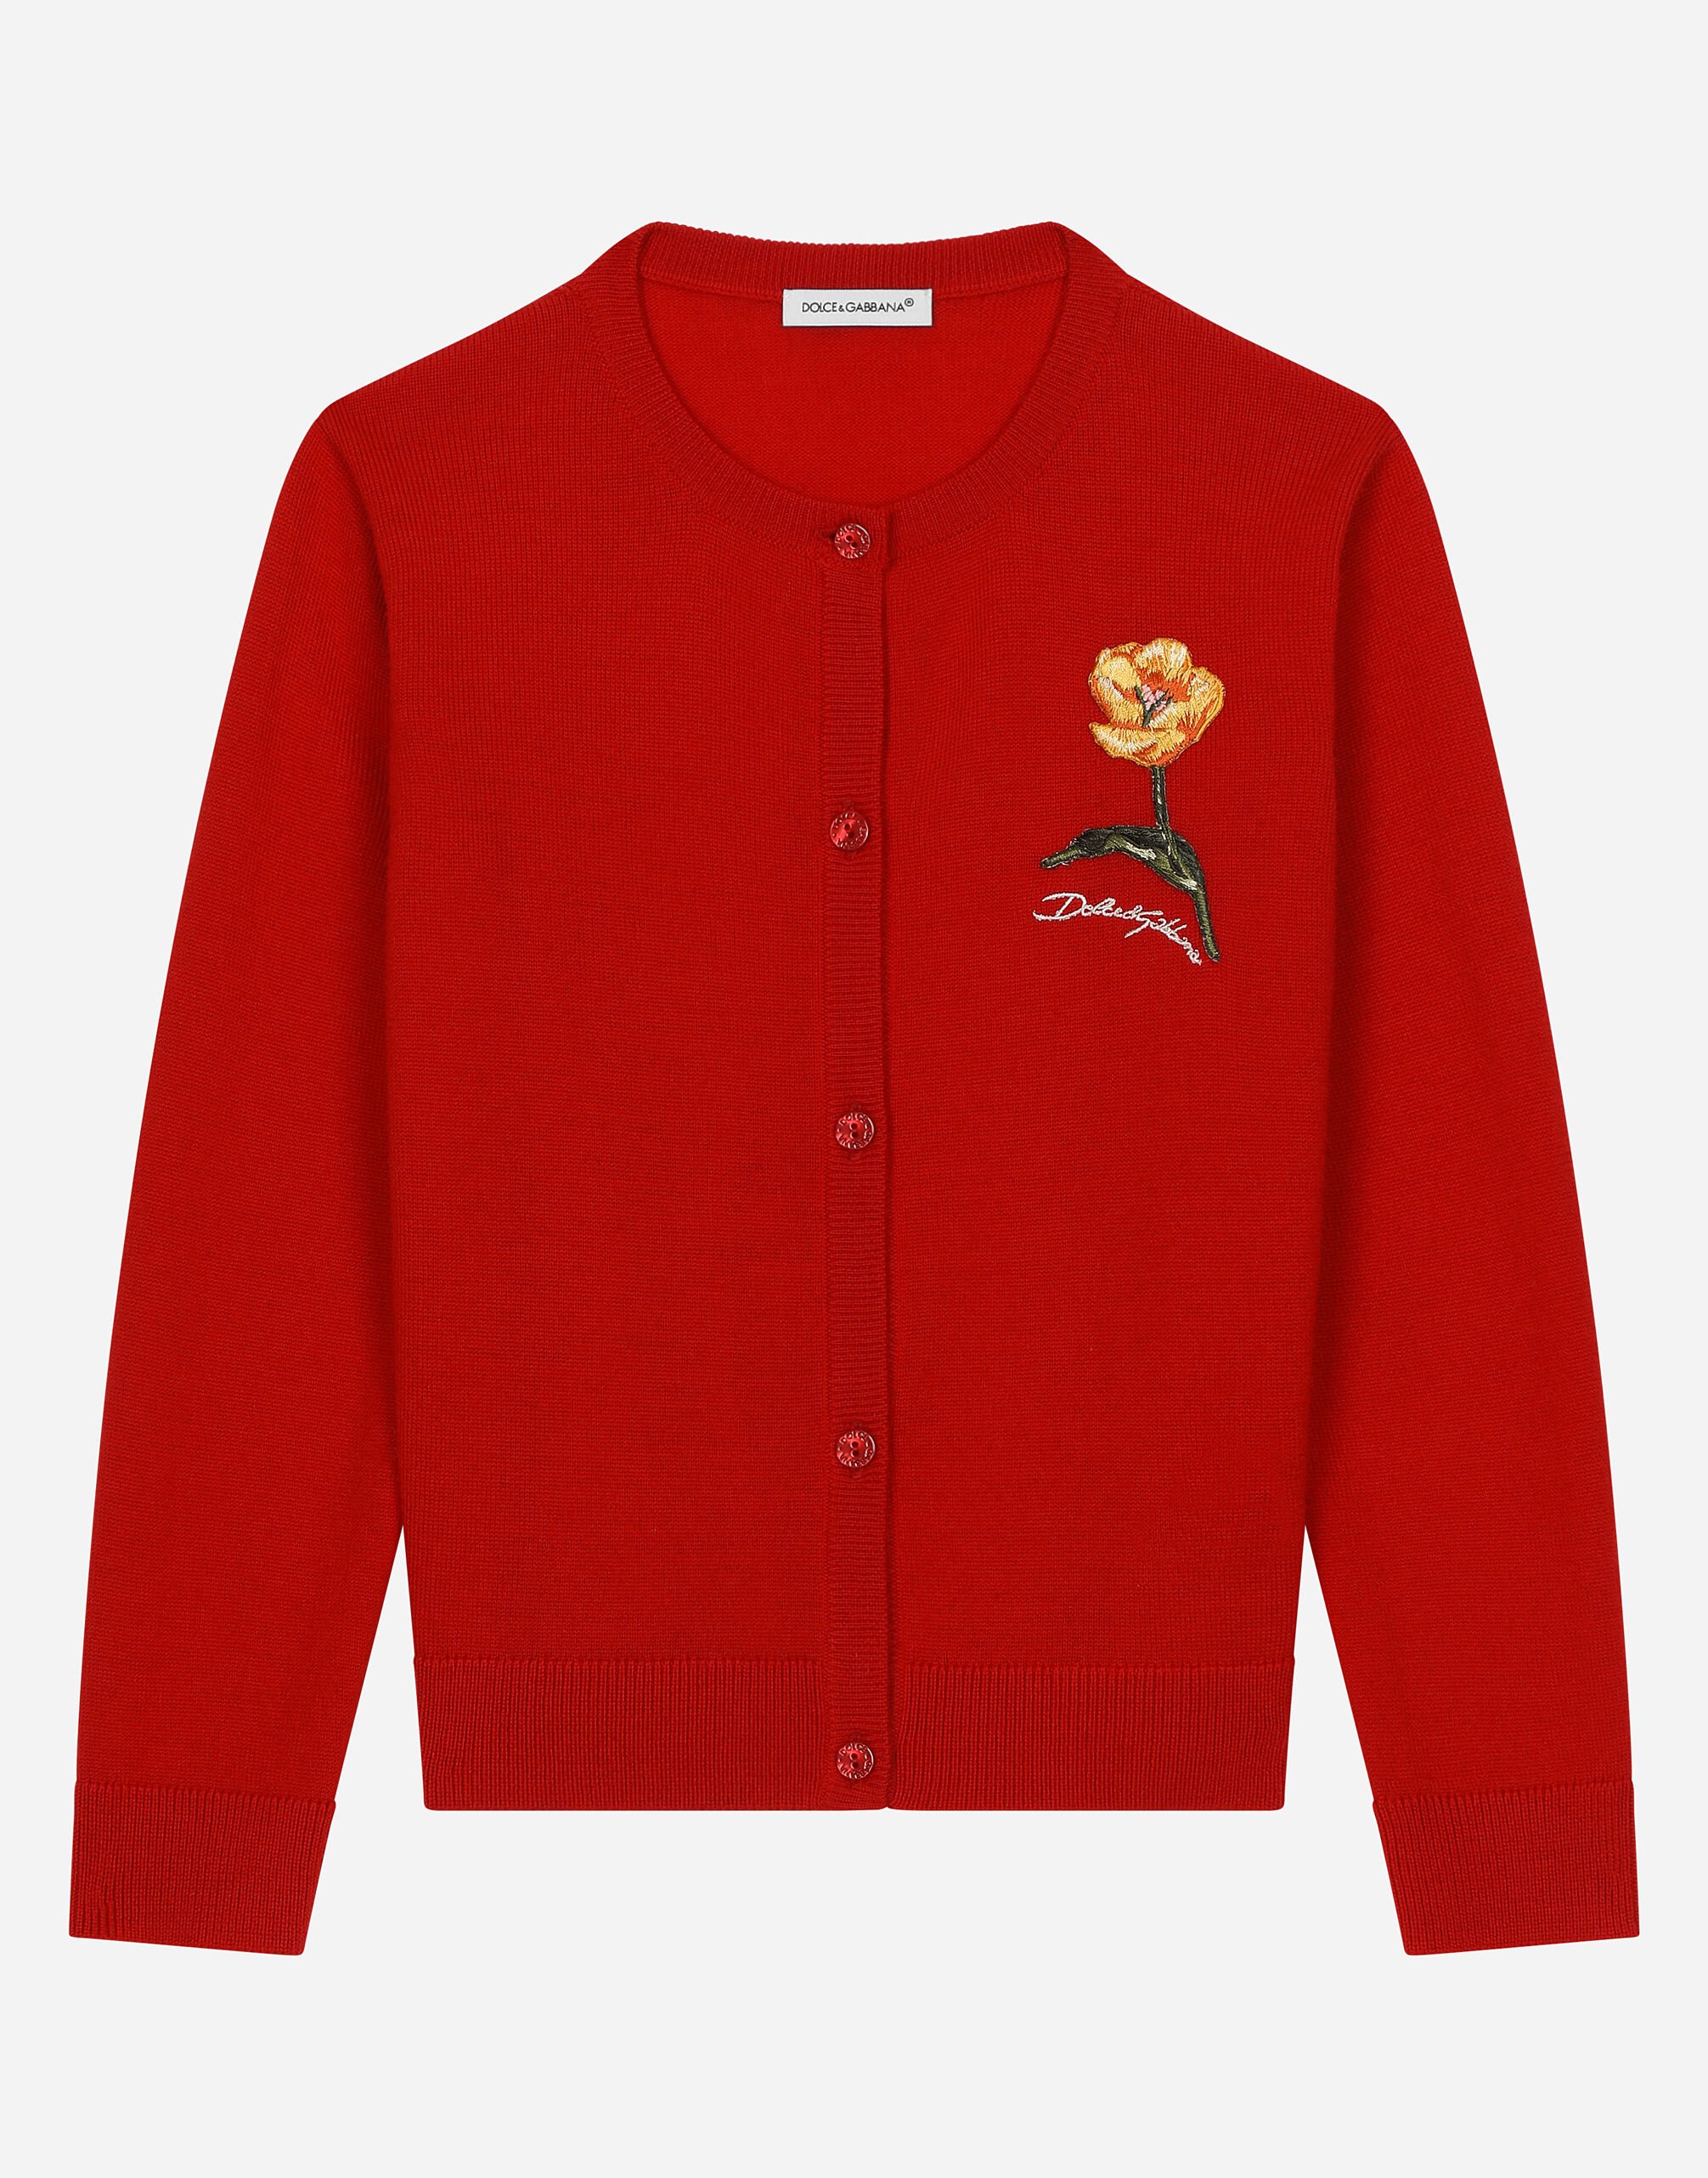 ${brand} Трикотажный кардиган с цветком и логотипом Dolce&Gabbana ${colorDescription} ${masterID}